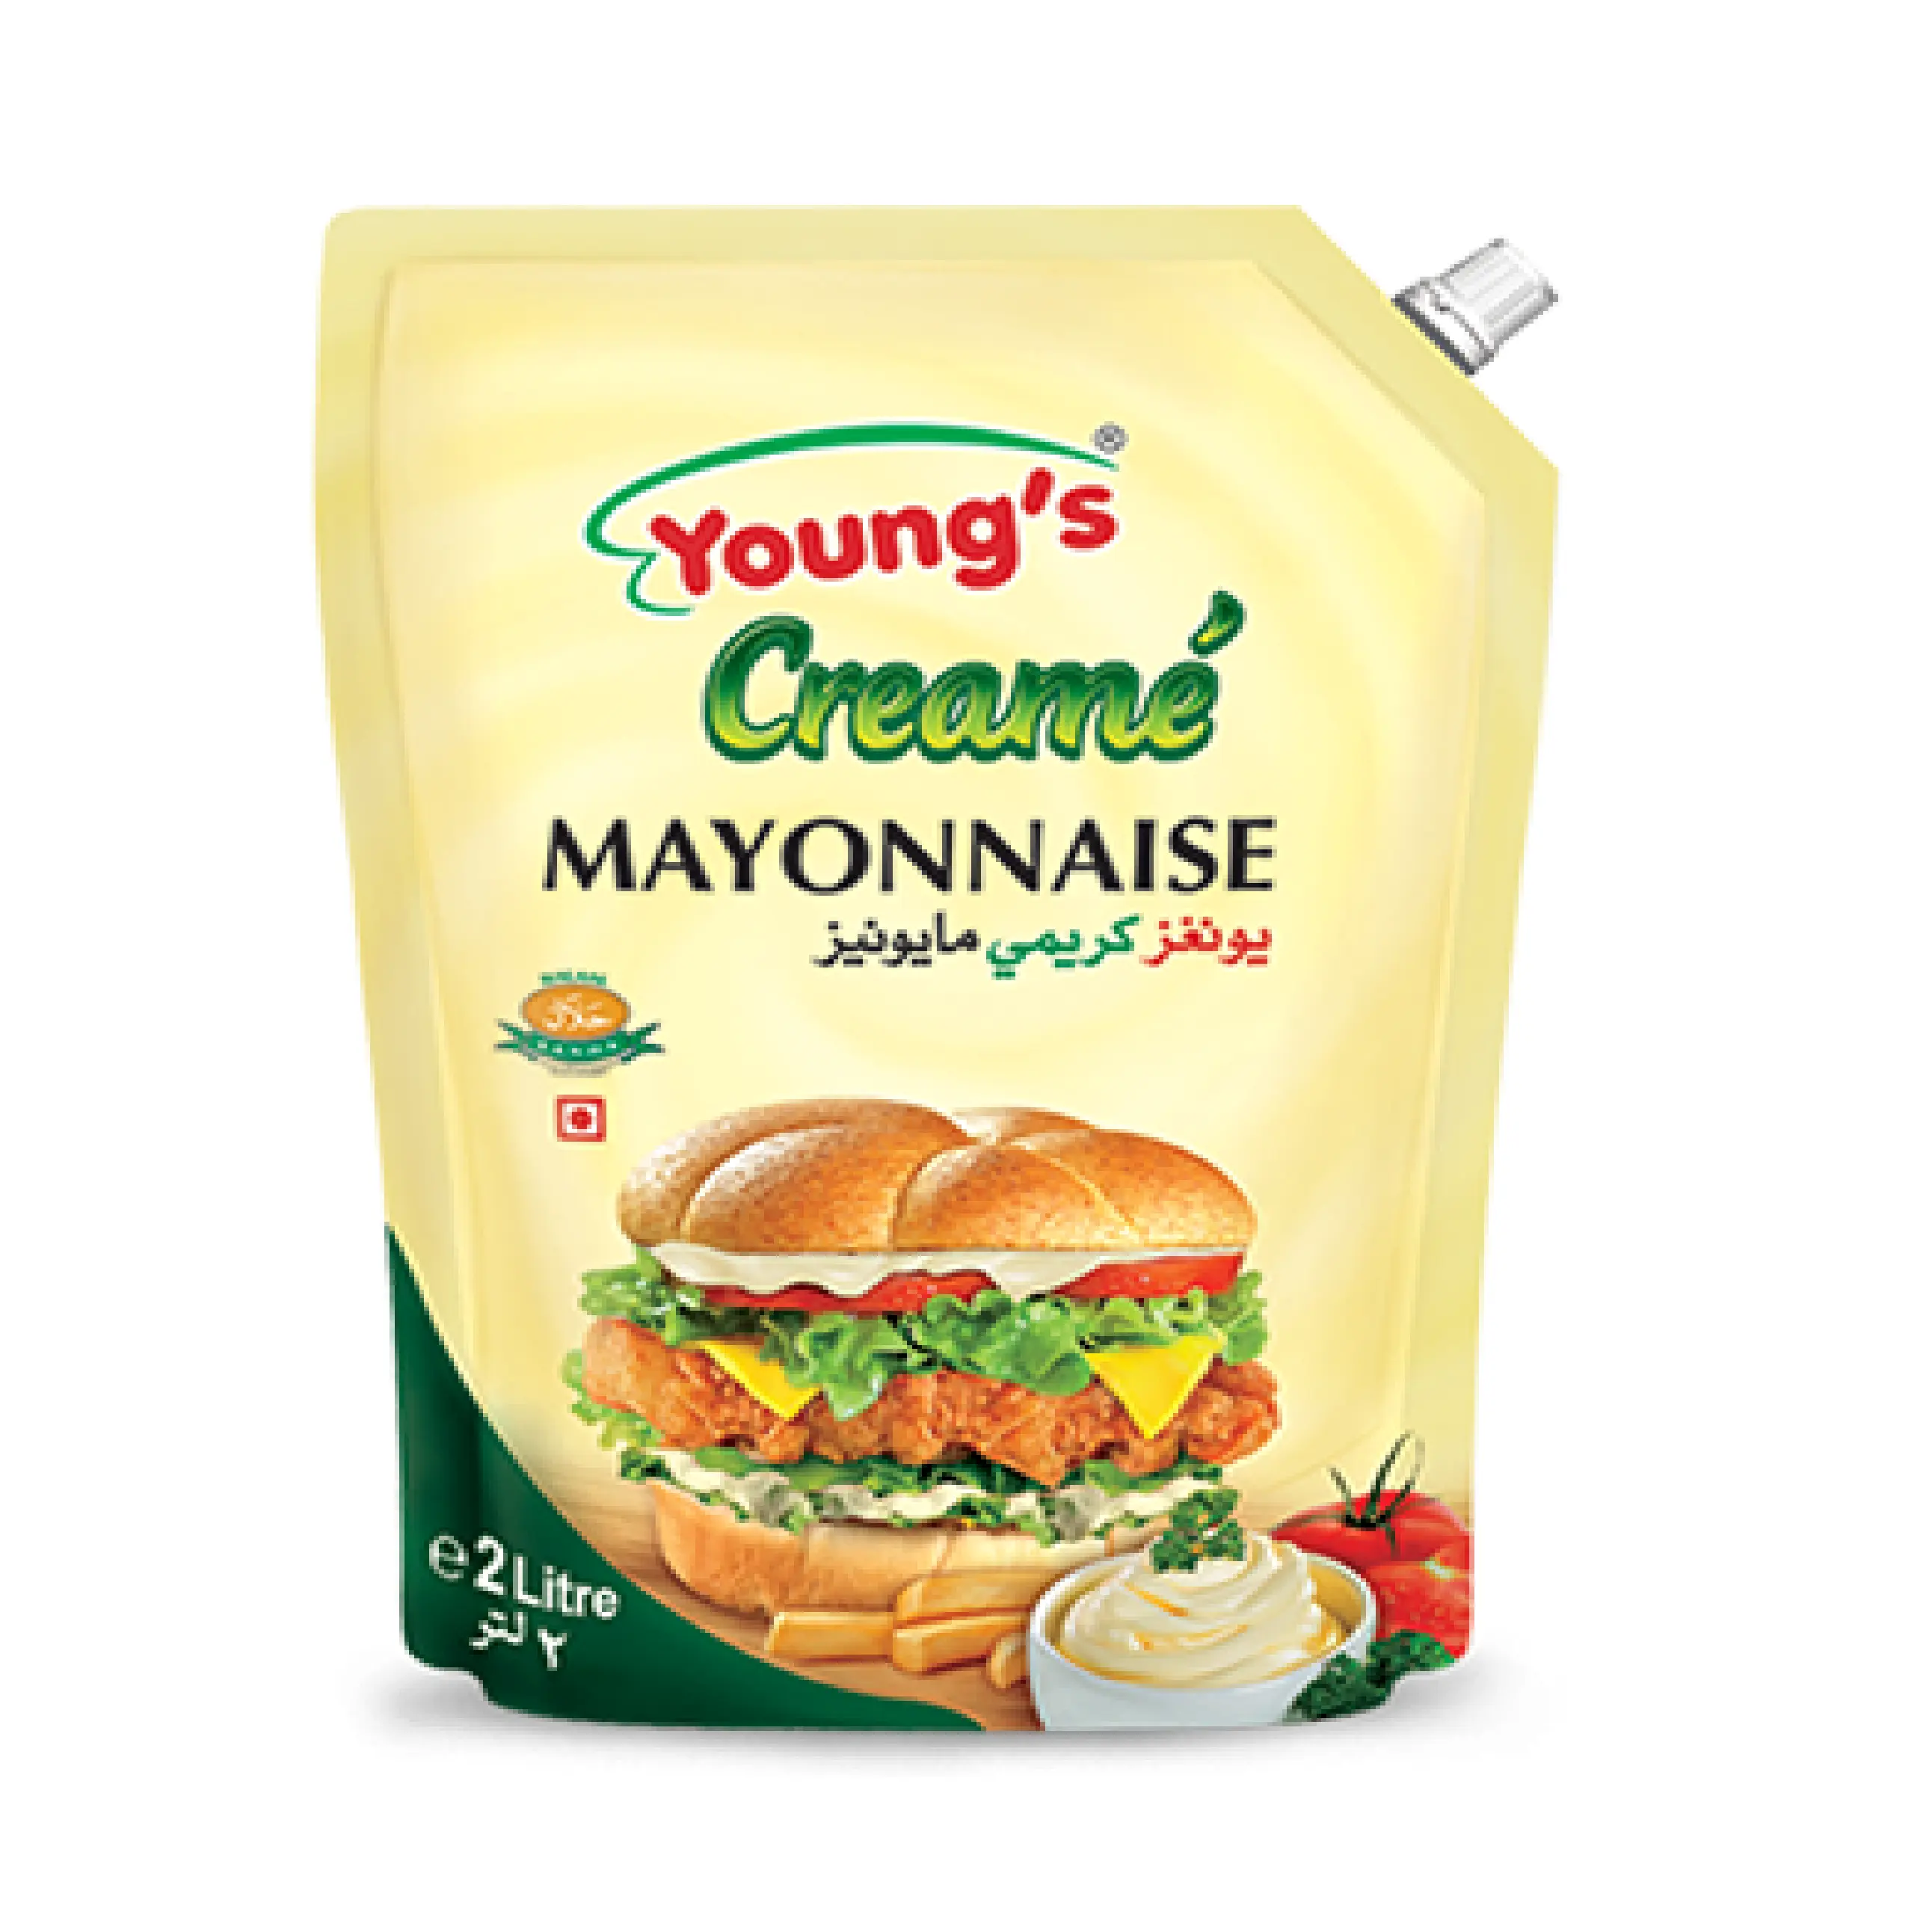 Майонез в пакете. Top mayonnaise Color. Майонез Халяль купить ПП.